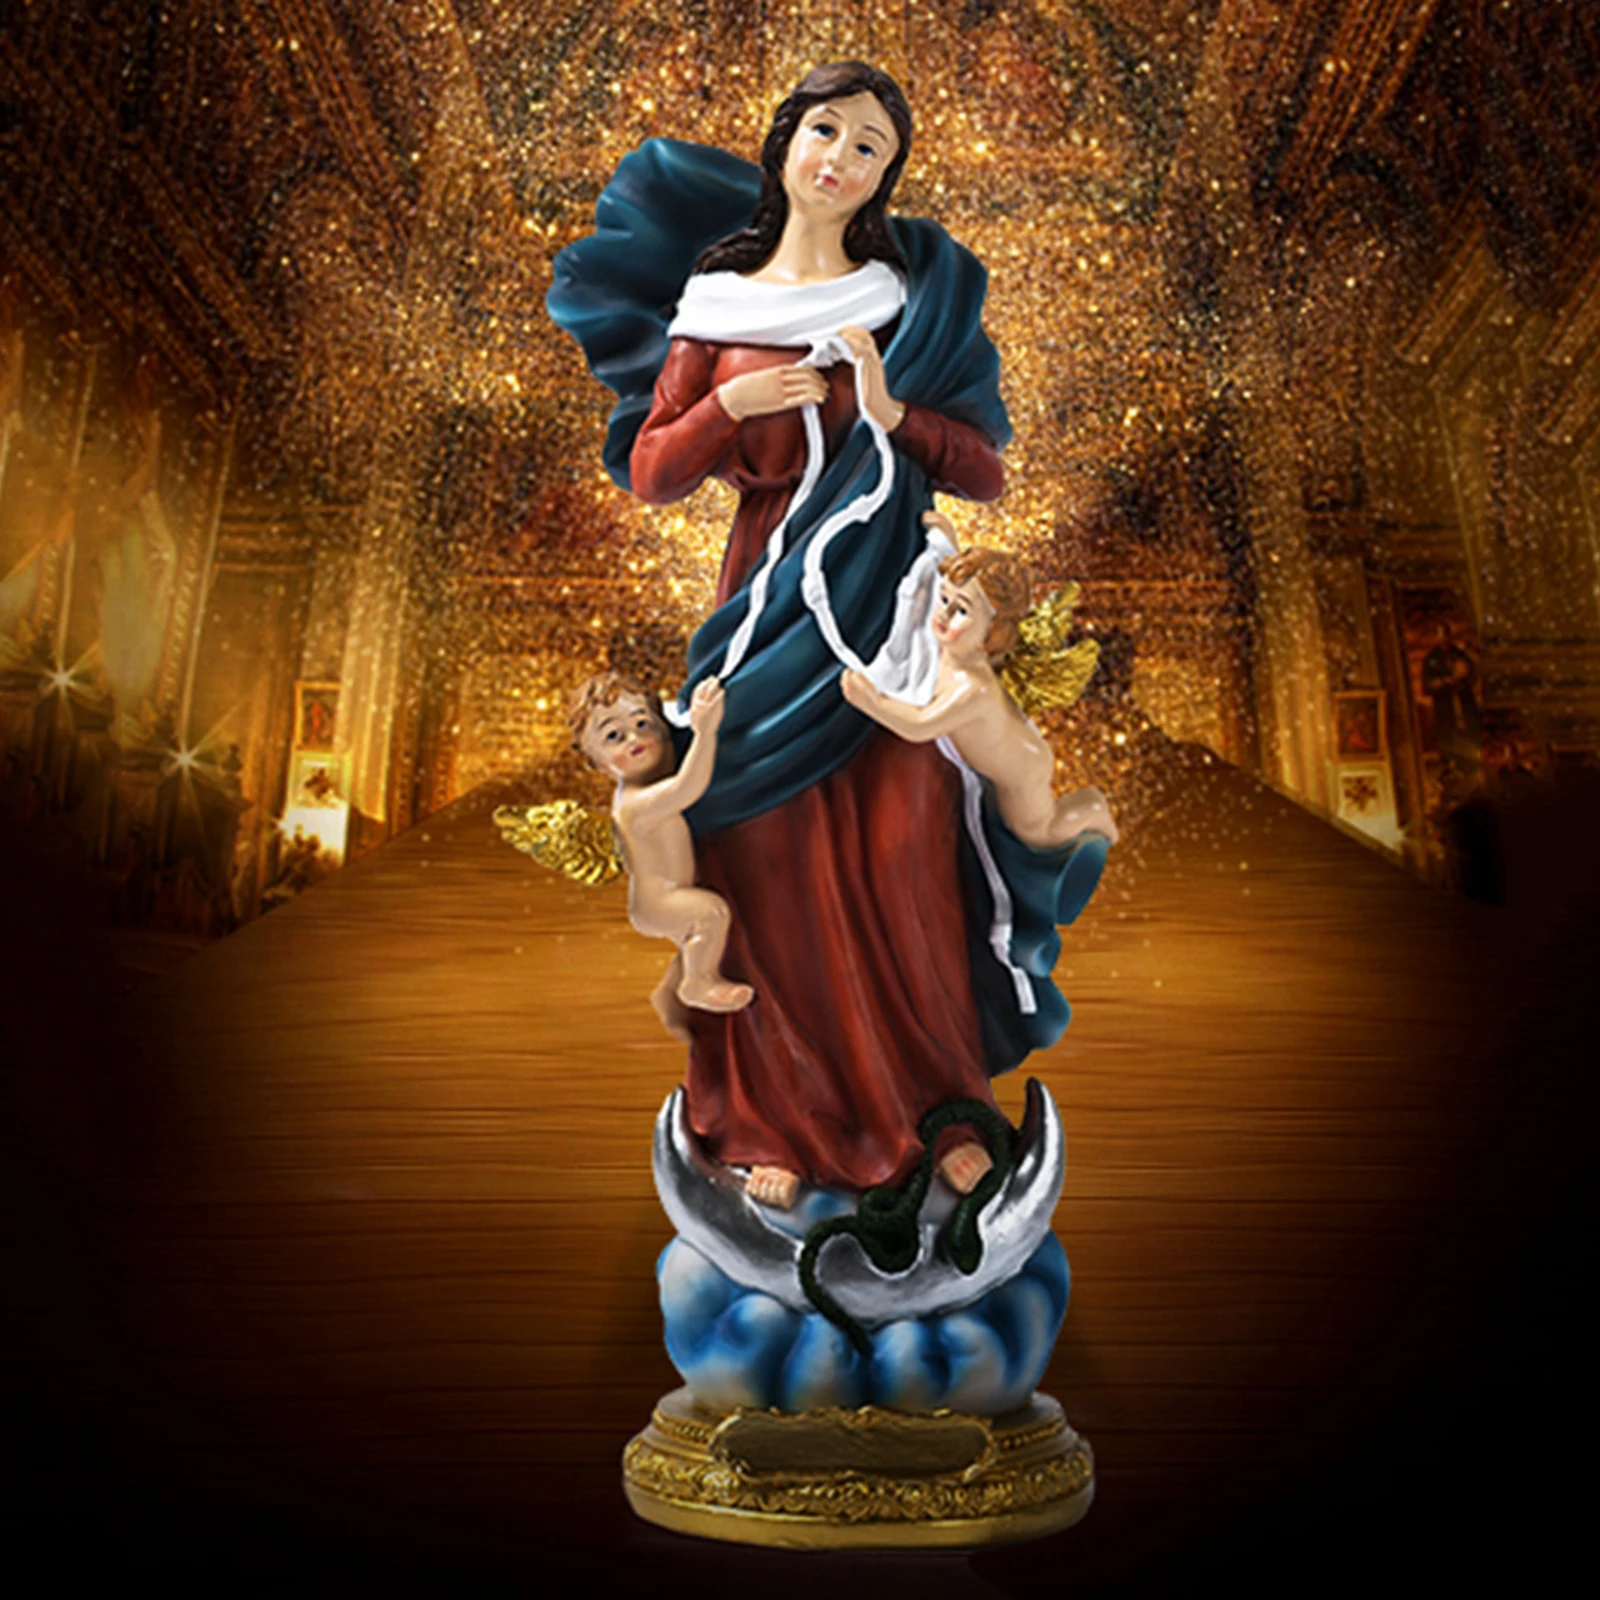 Rare Virgin Mary Figurine Christian Figure Religious Figure Sculpture Tabletop Display Church Decors Home Ornaments